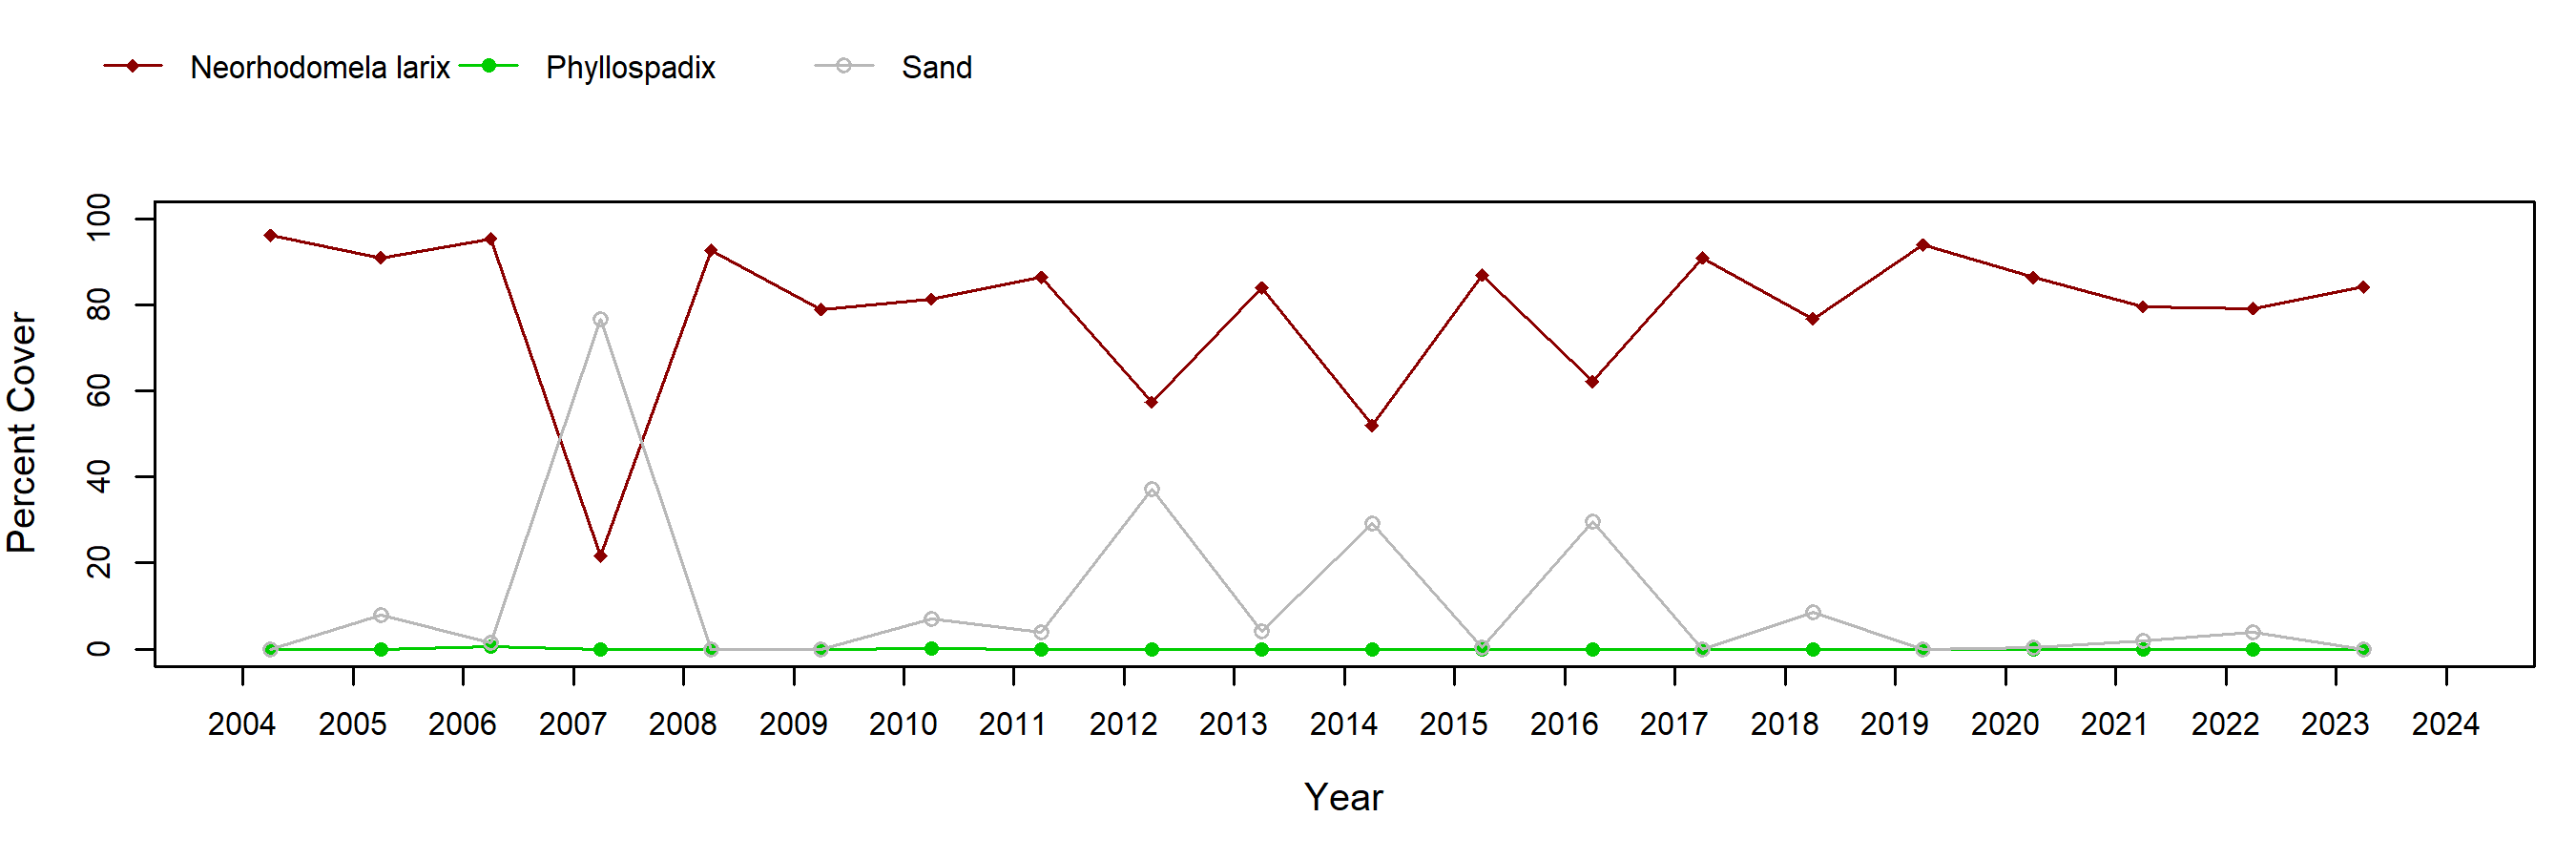 Sea Ranch Neorhodomela trend plot